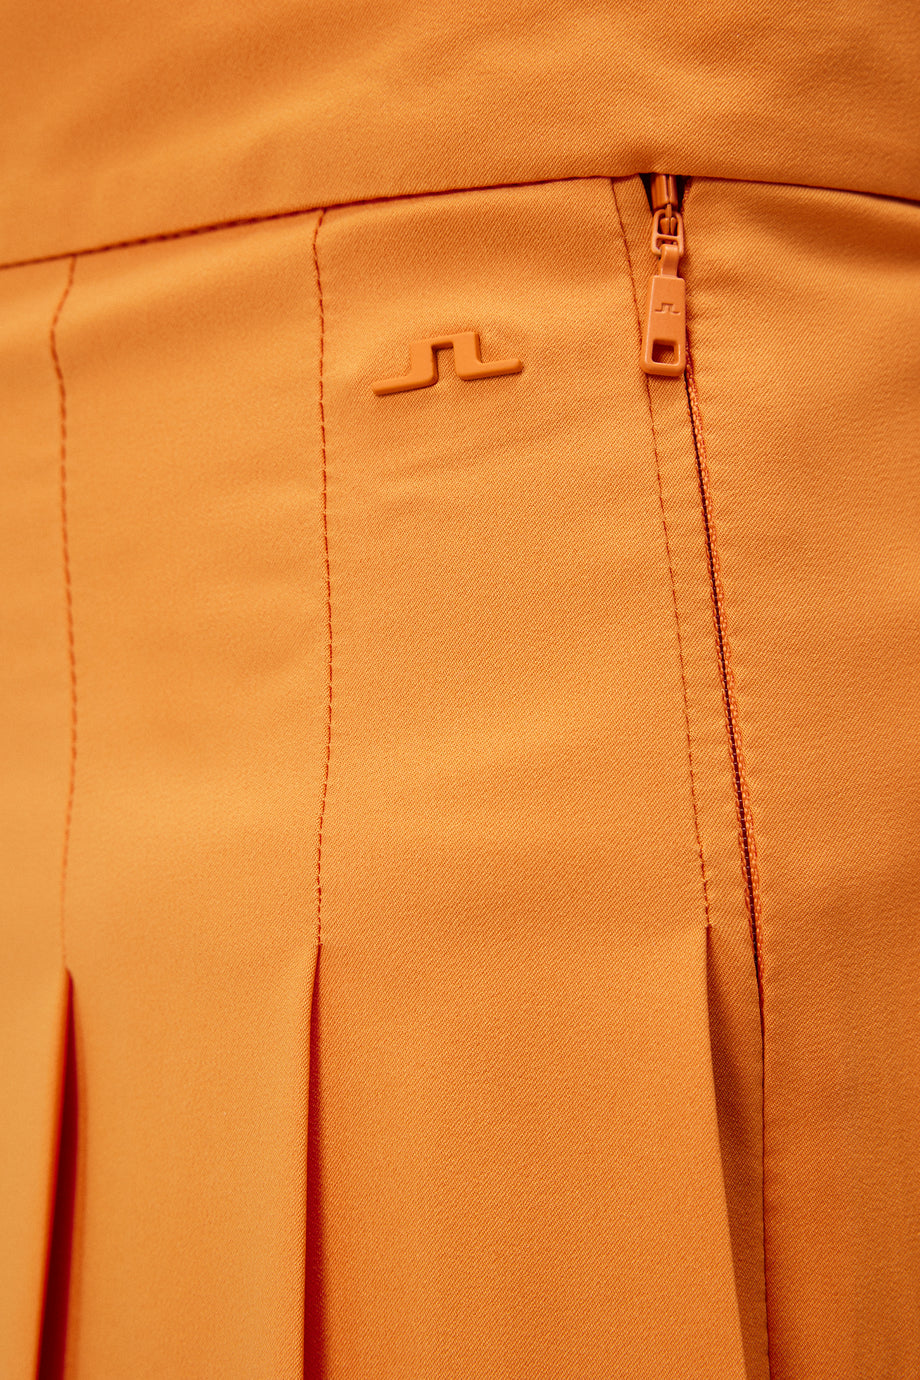 Adina Skirt / Russet Orange